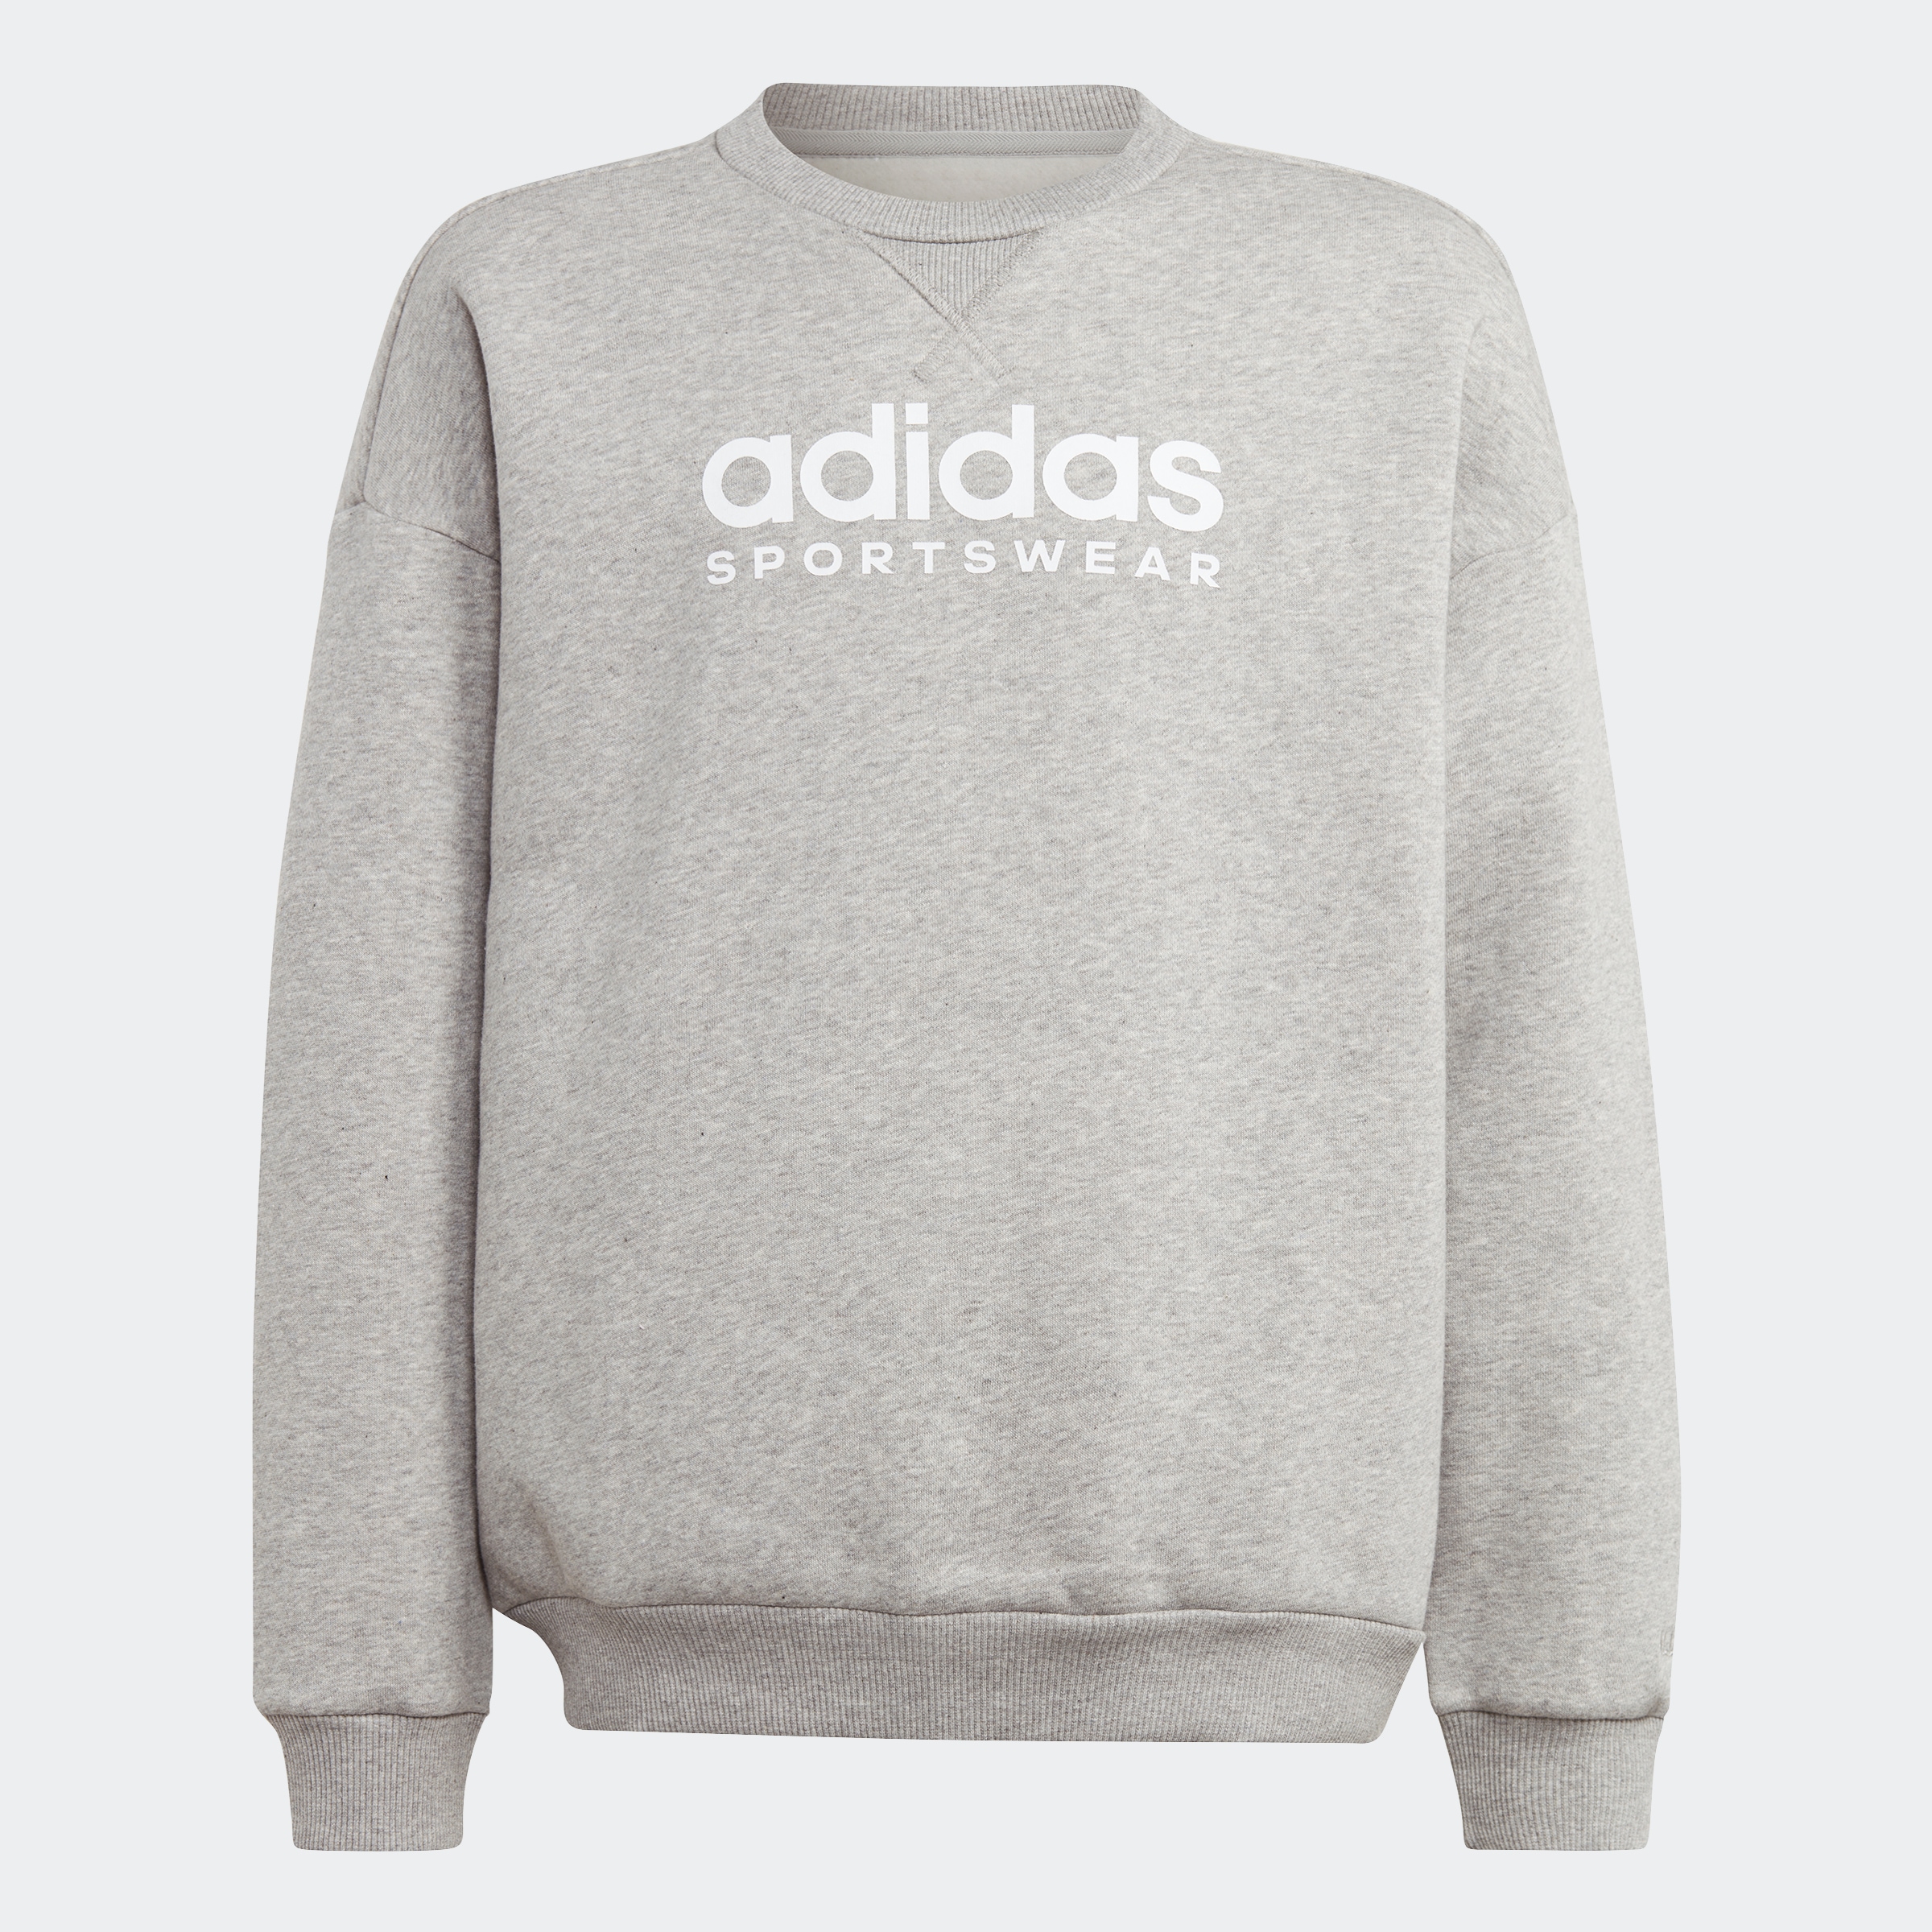 | CREW« »J BAUR kaufen Sweatshirt Sportswear adidas ALL online SZN